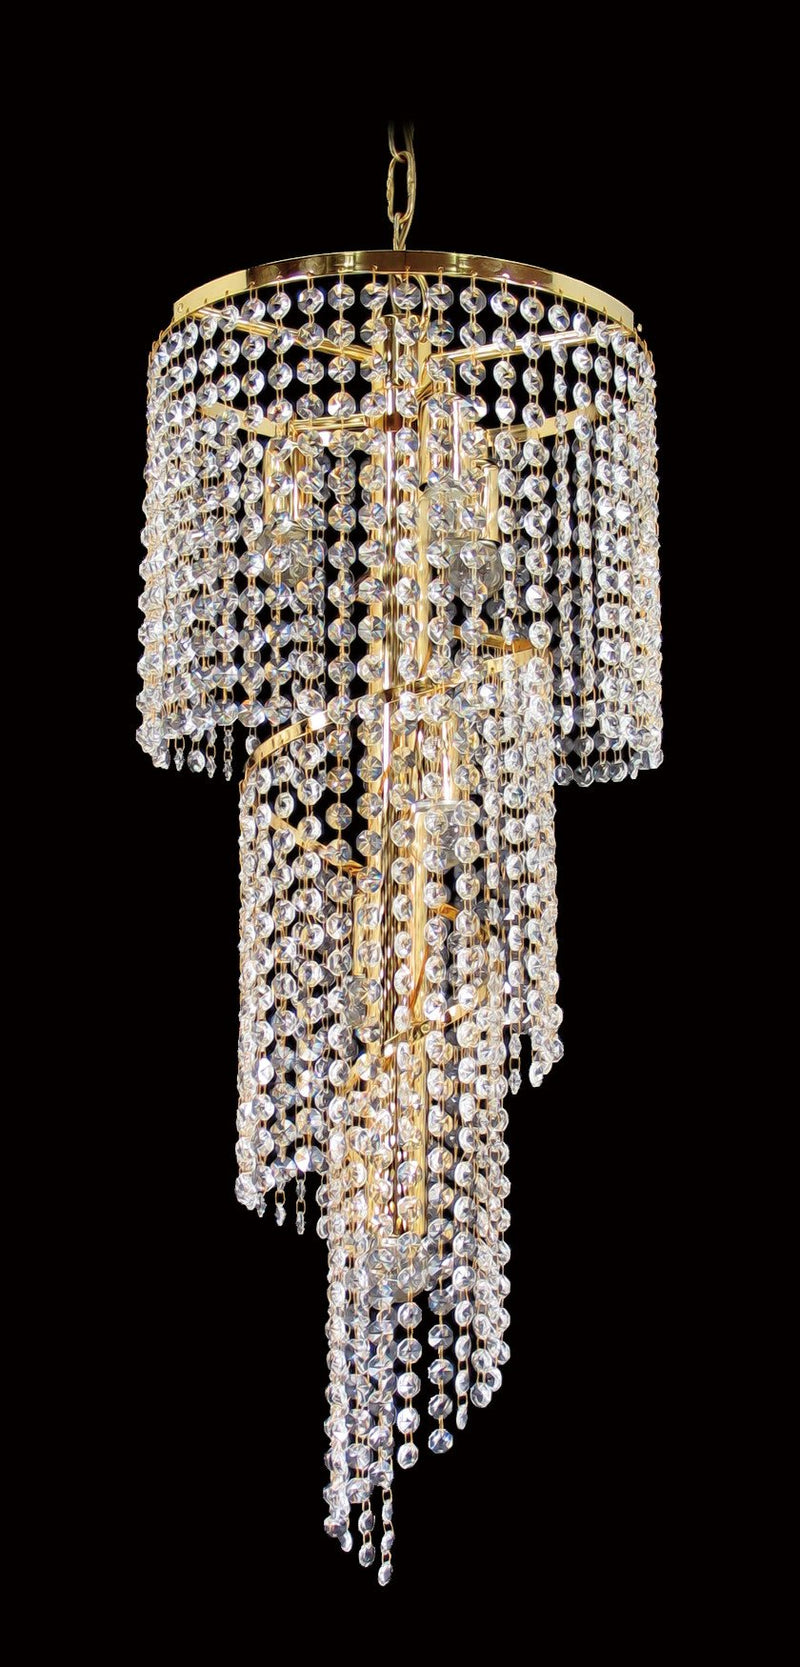 701 Crystal Pendant Light 12" 6 Light - Asfour Crystal 14mm Beads - Chandelier [701-12"-14mm]